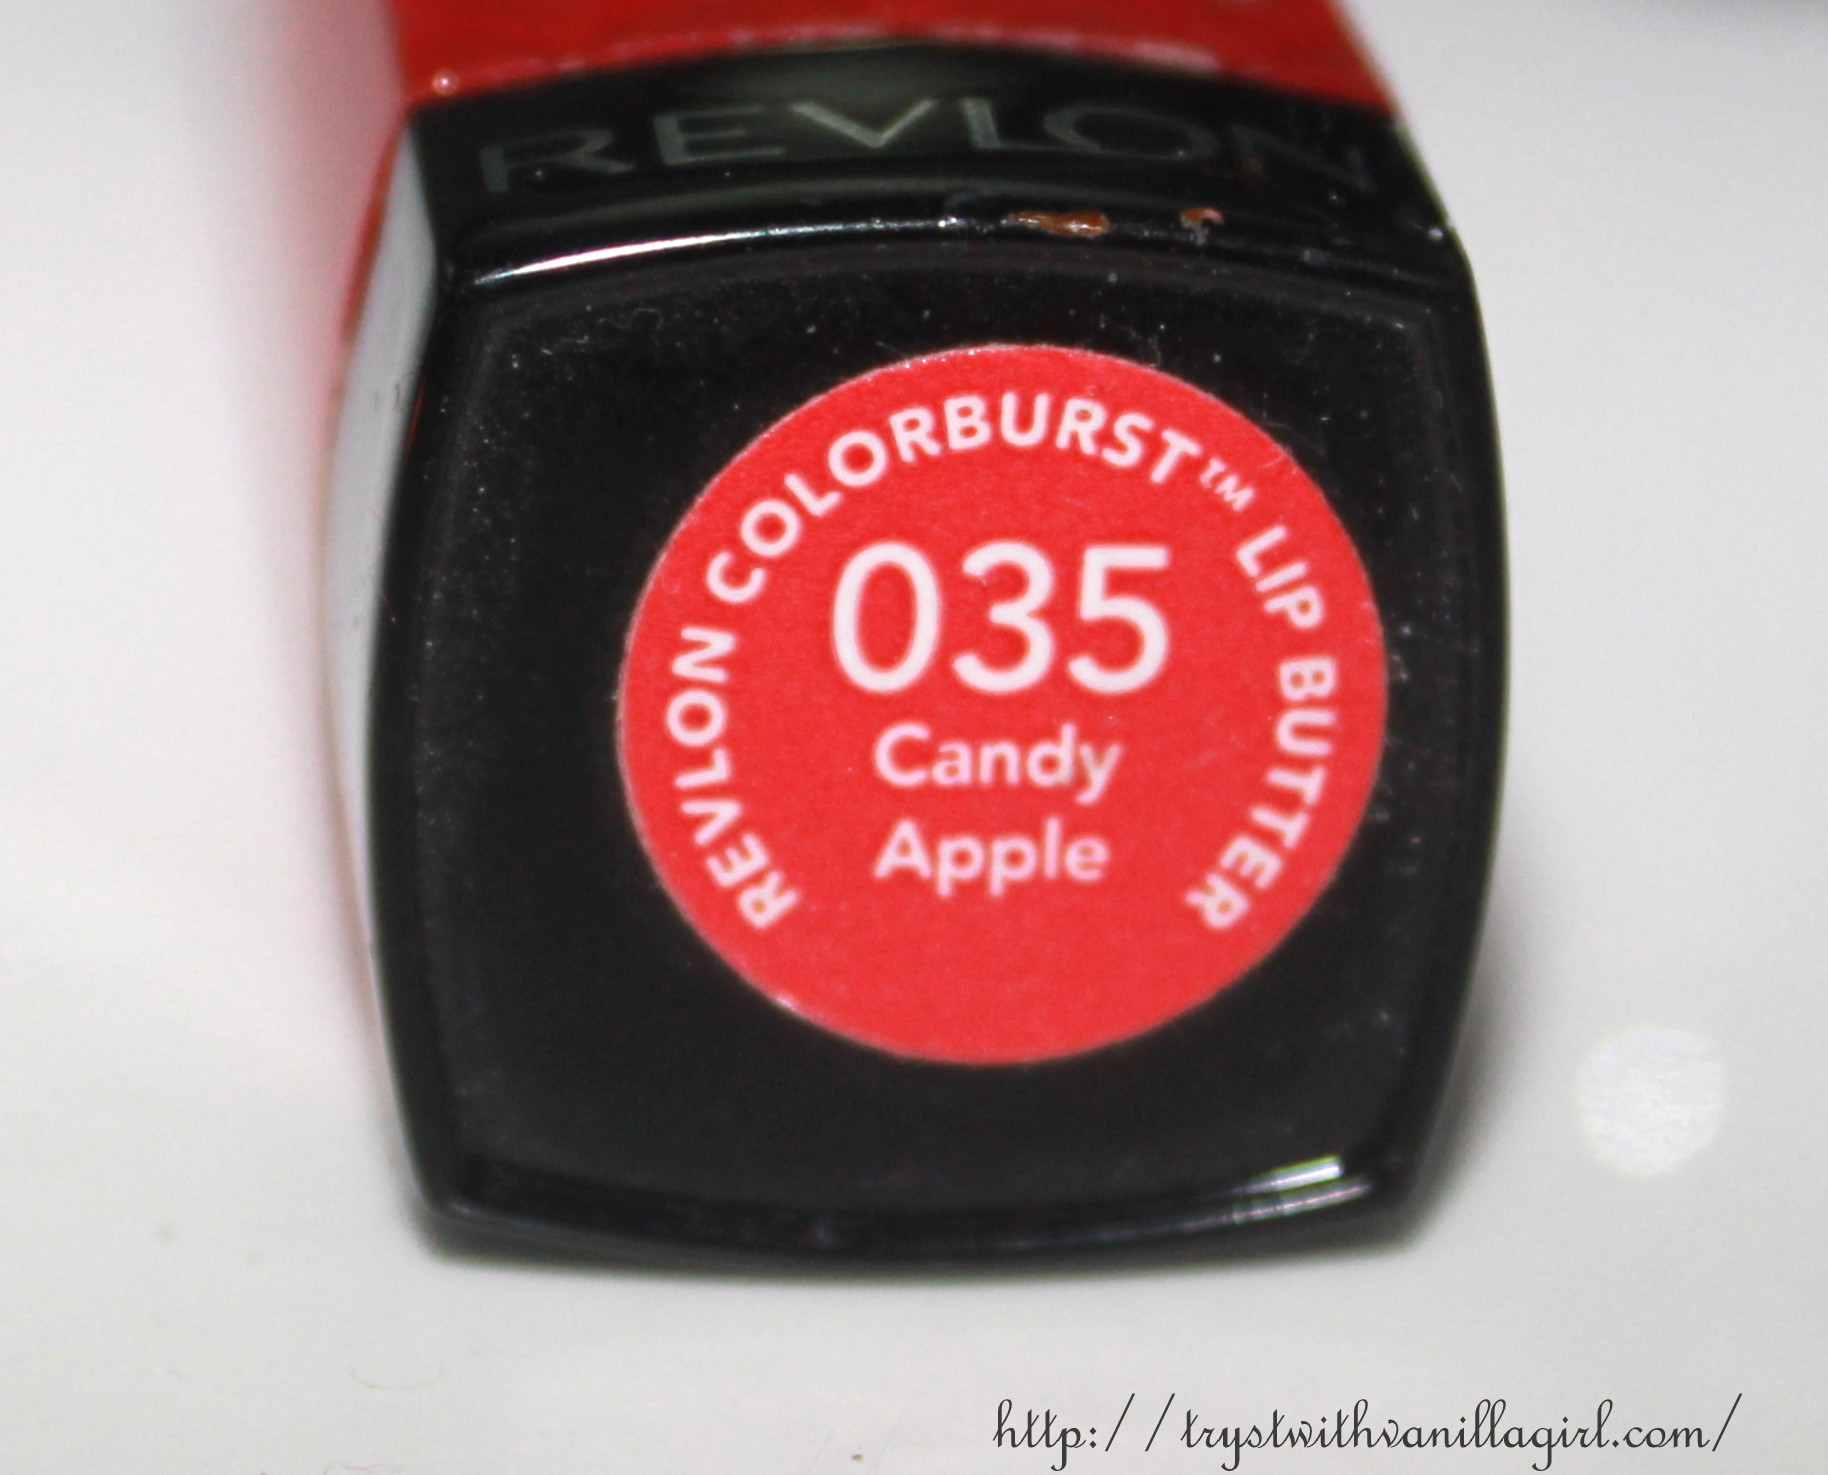 Revlon ColorBurst Lip Butter Candy Apple Review,Swatch,Photos